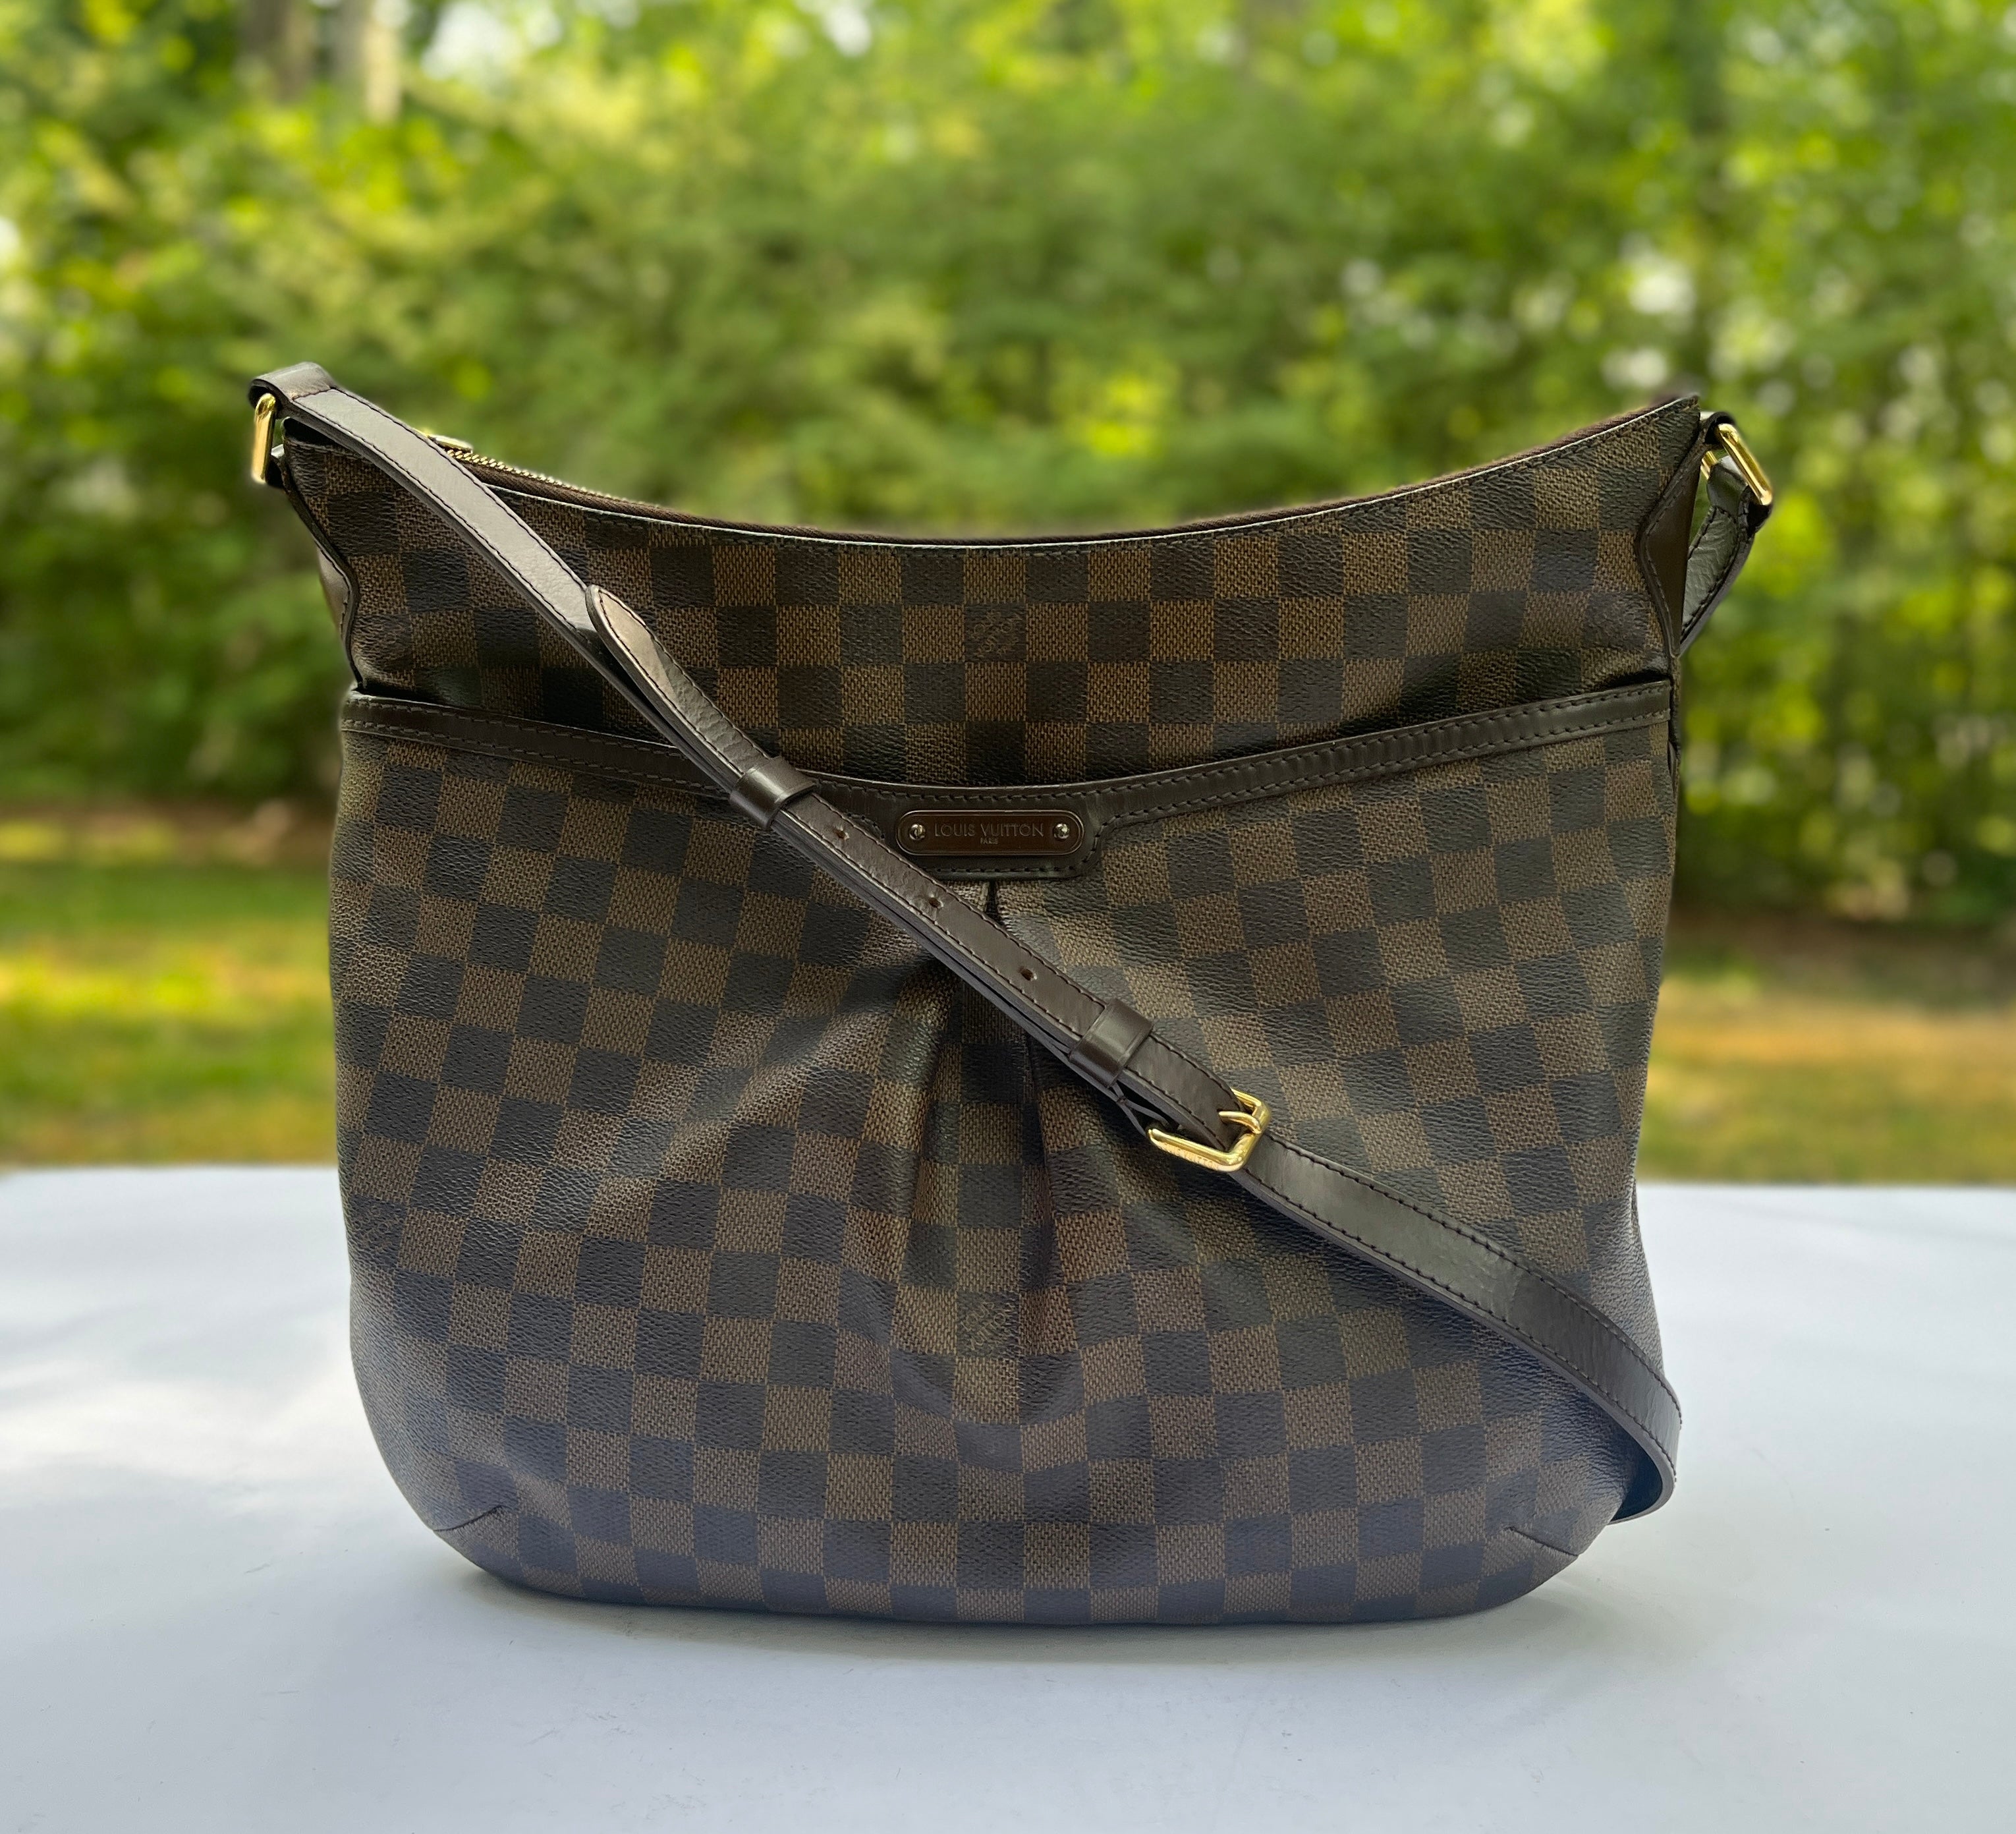 Louis Vuitton Trevi GM Damier Ebene 2way Shoulder Bag